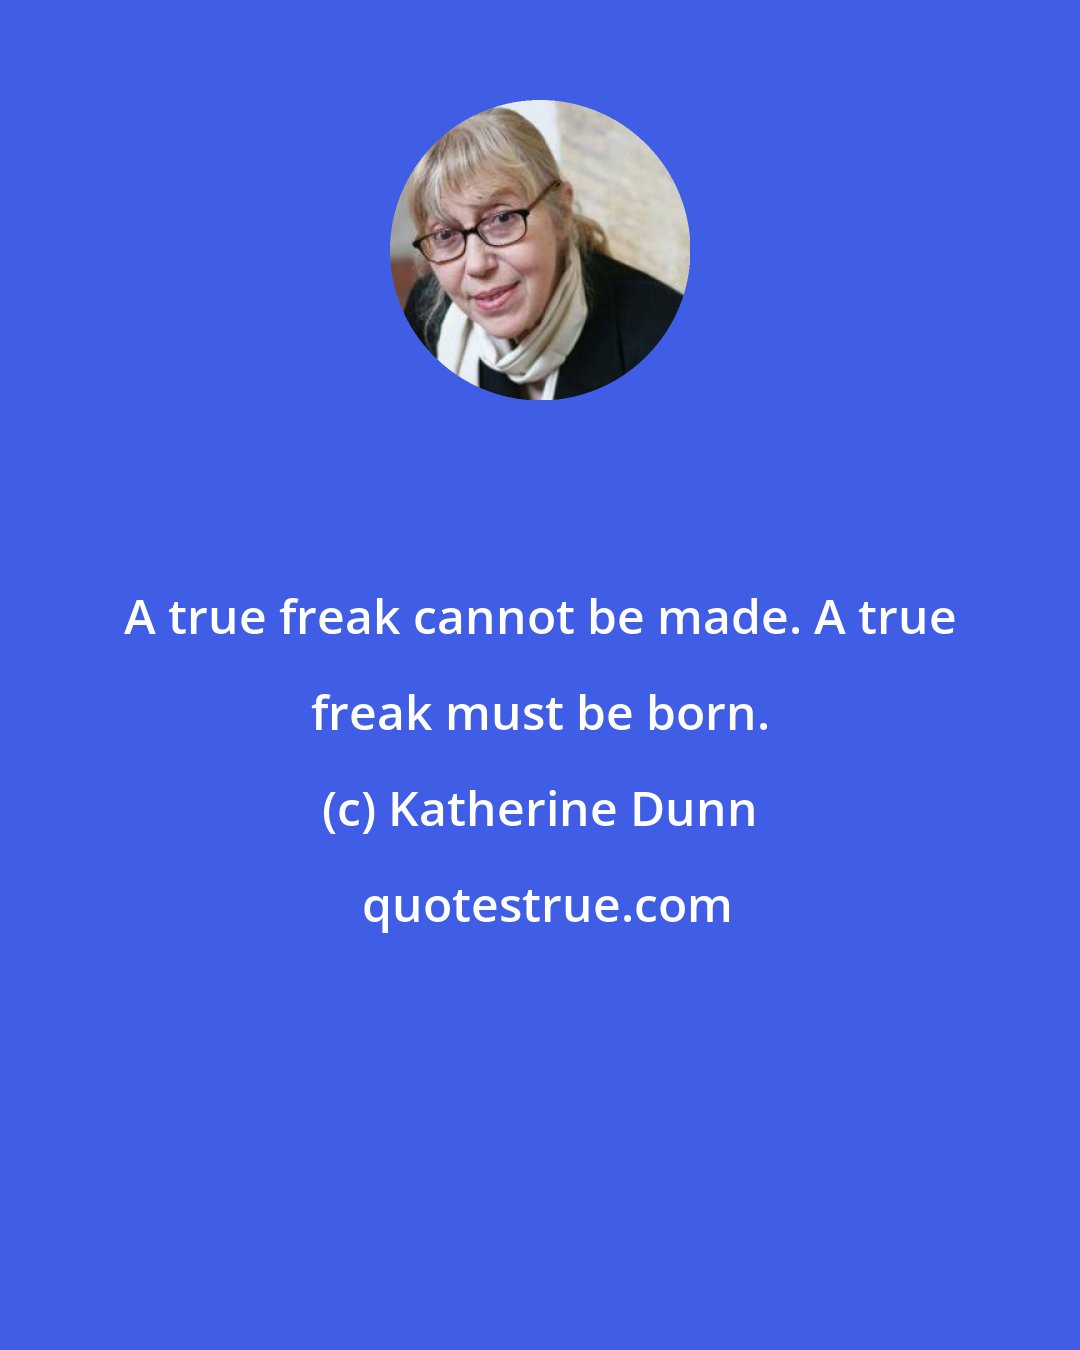 Katherine Dunn: A true freak cannot be made. A true freak must be born.